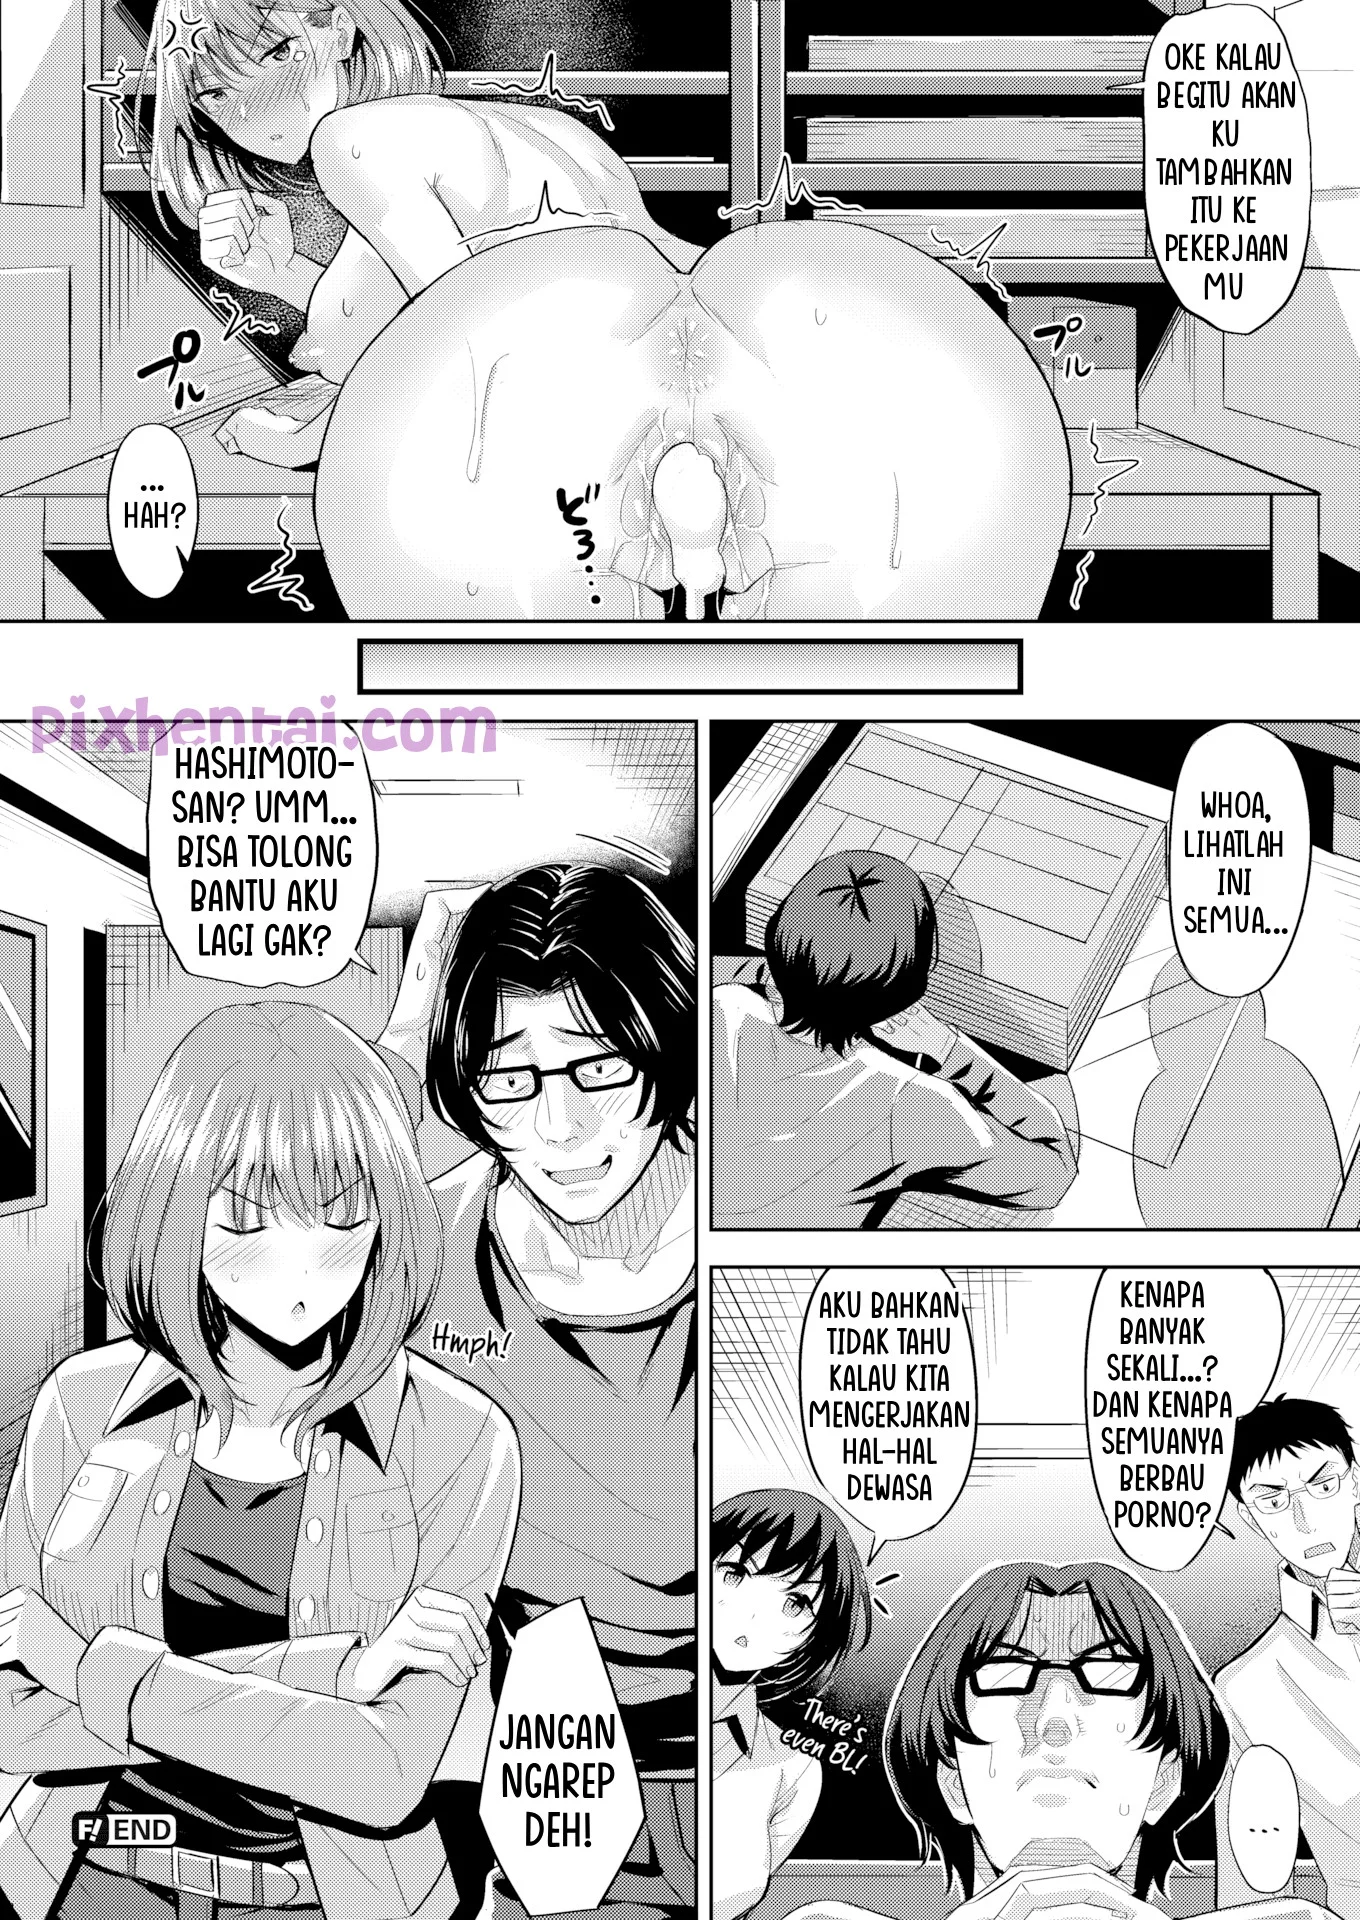 Komik hentai xxx manga sex bokep Susuku Jadi Bahan Referensi Animator 18